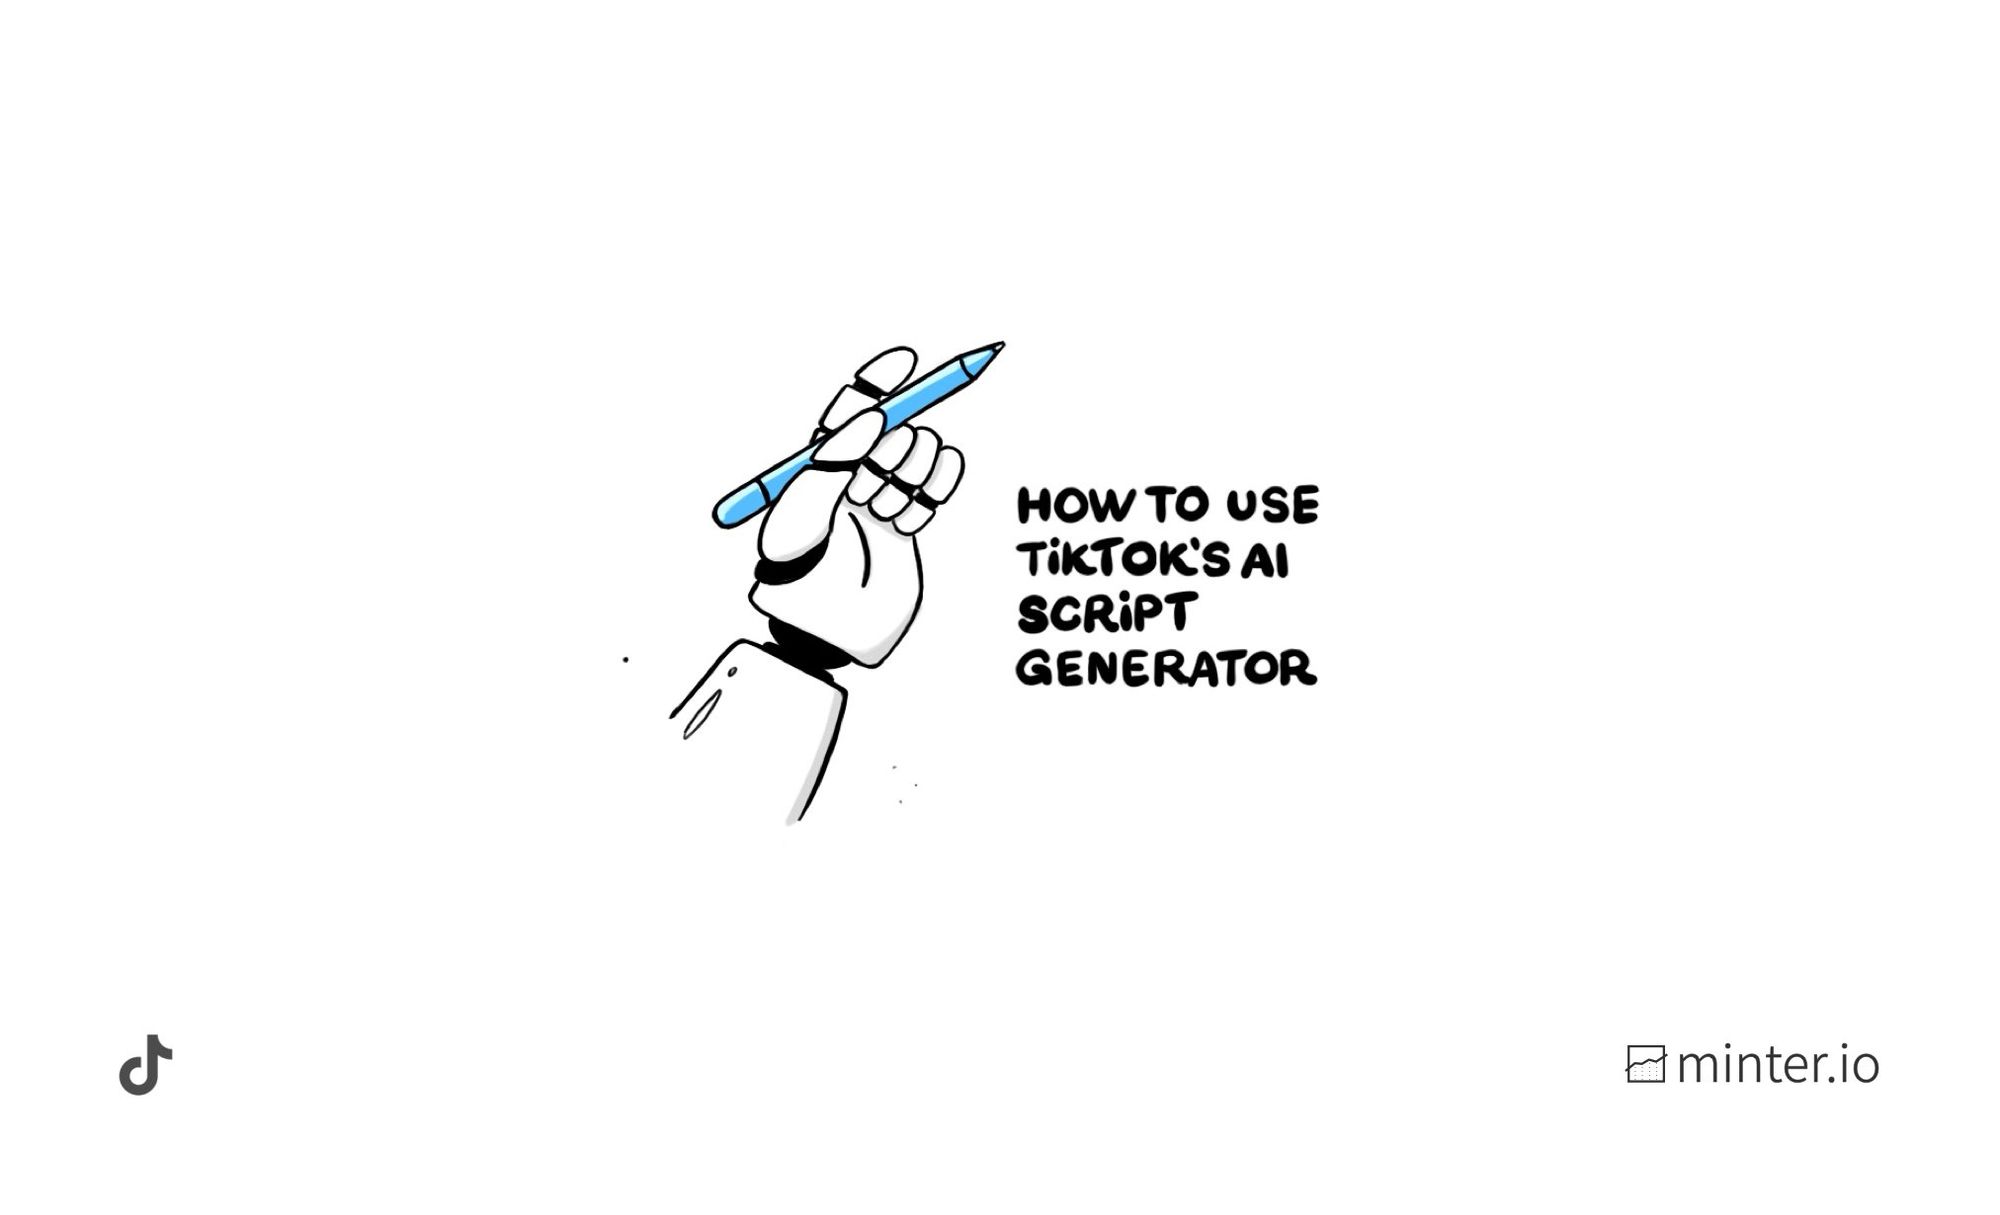 How to use TikTok’s AI script generator